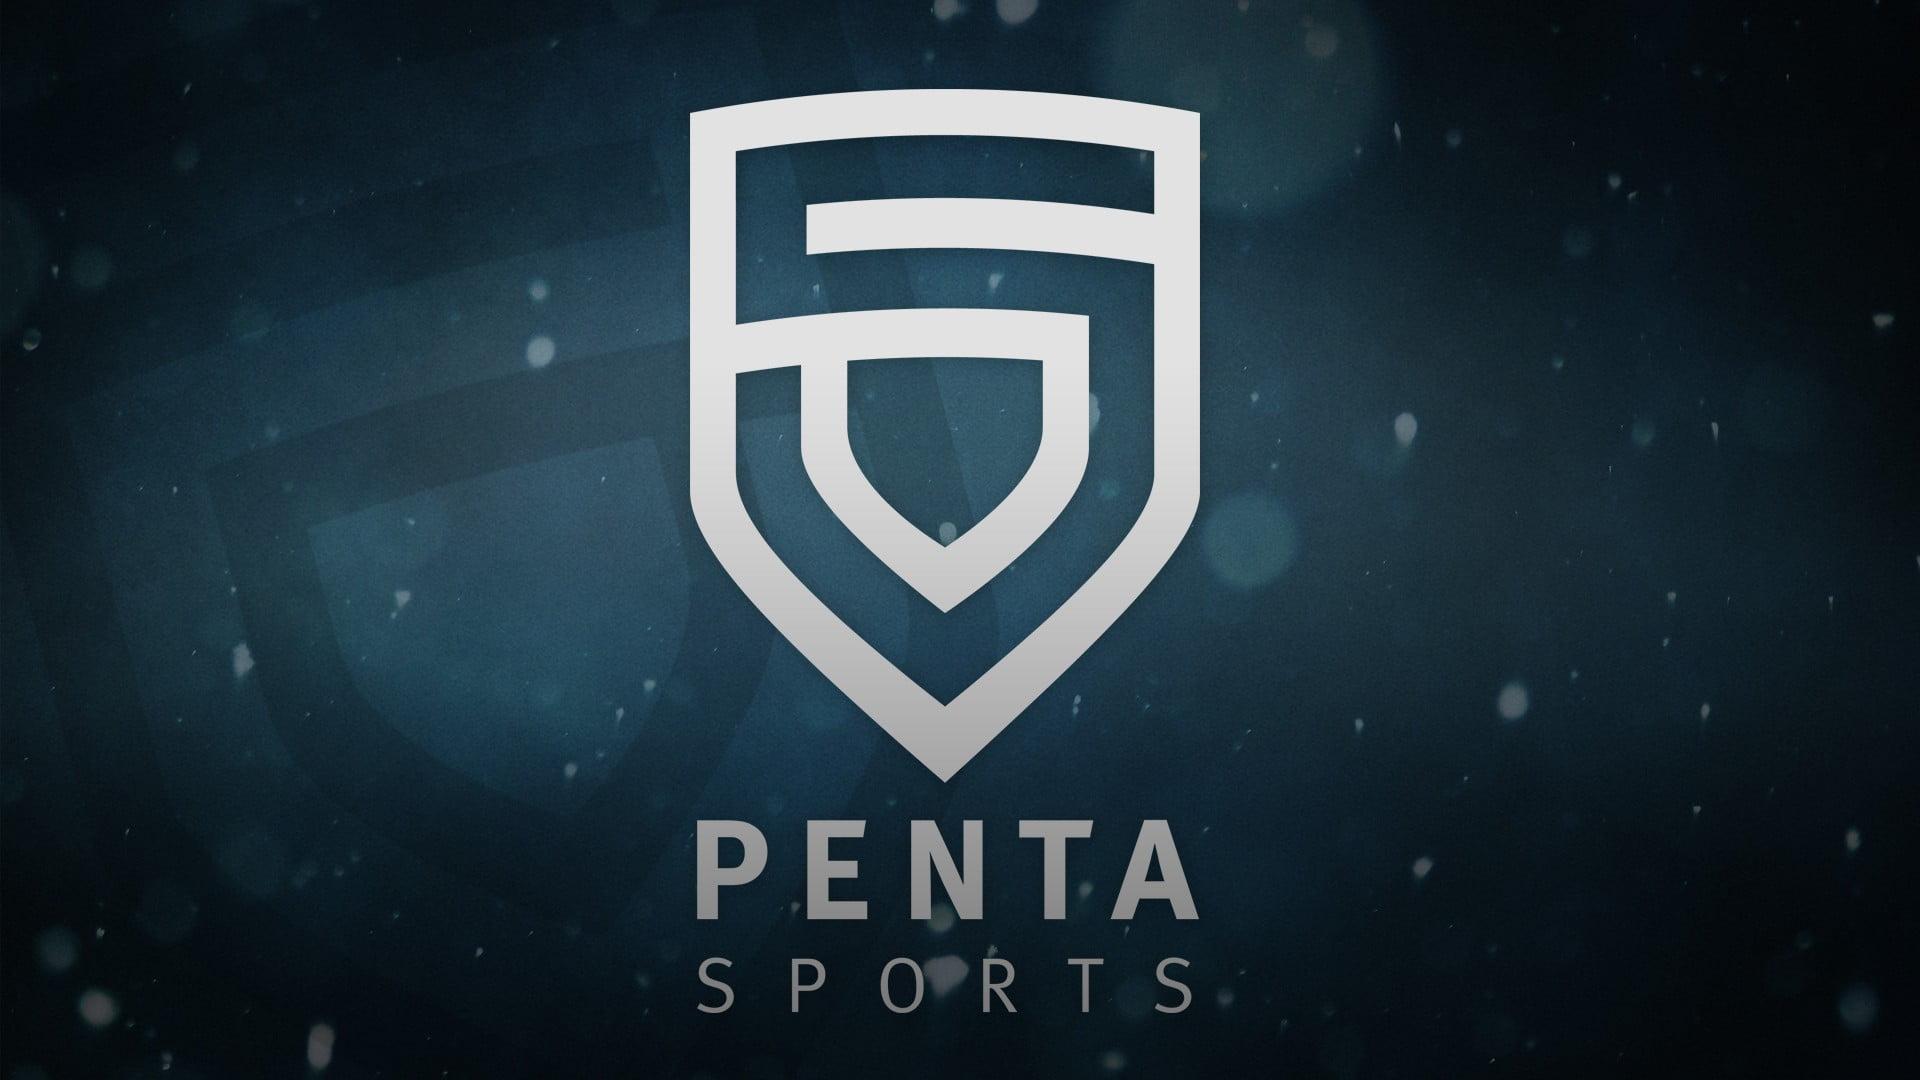 Penta Sports Digital Wallpaper, Counter Strike: Global